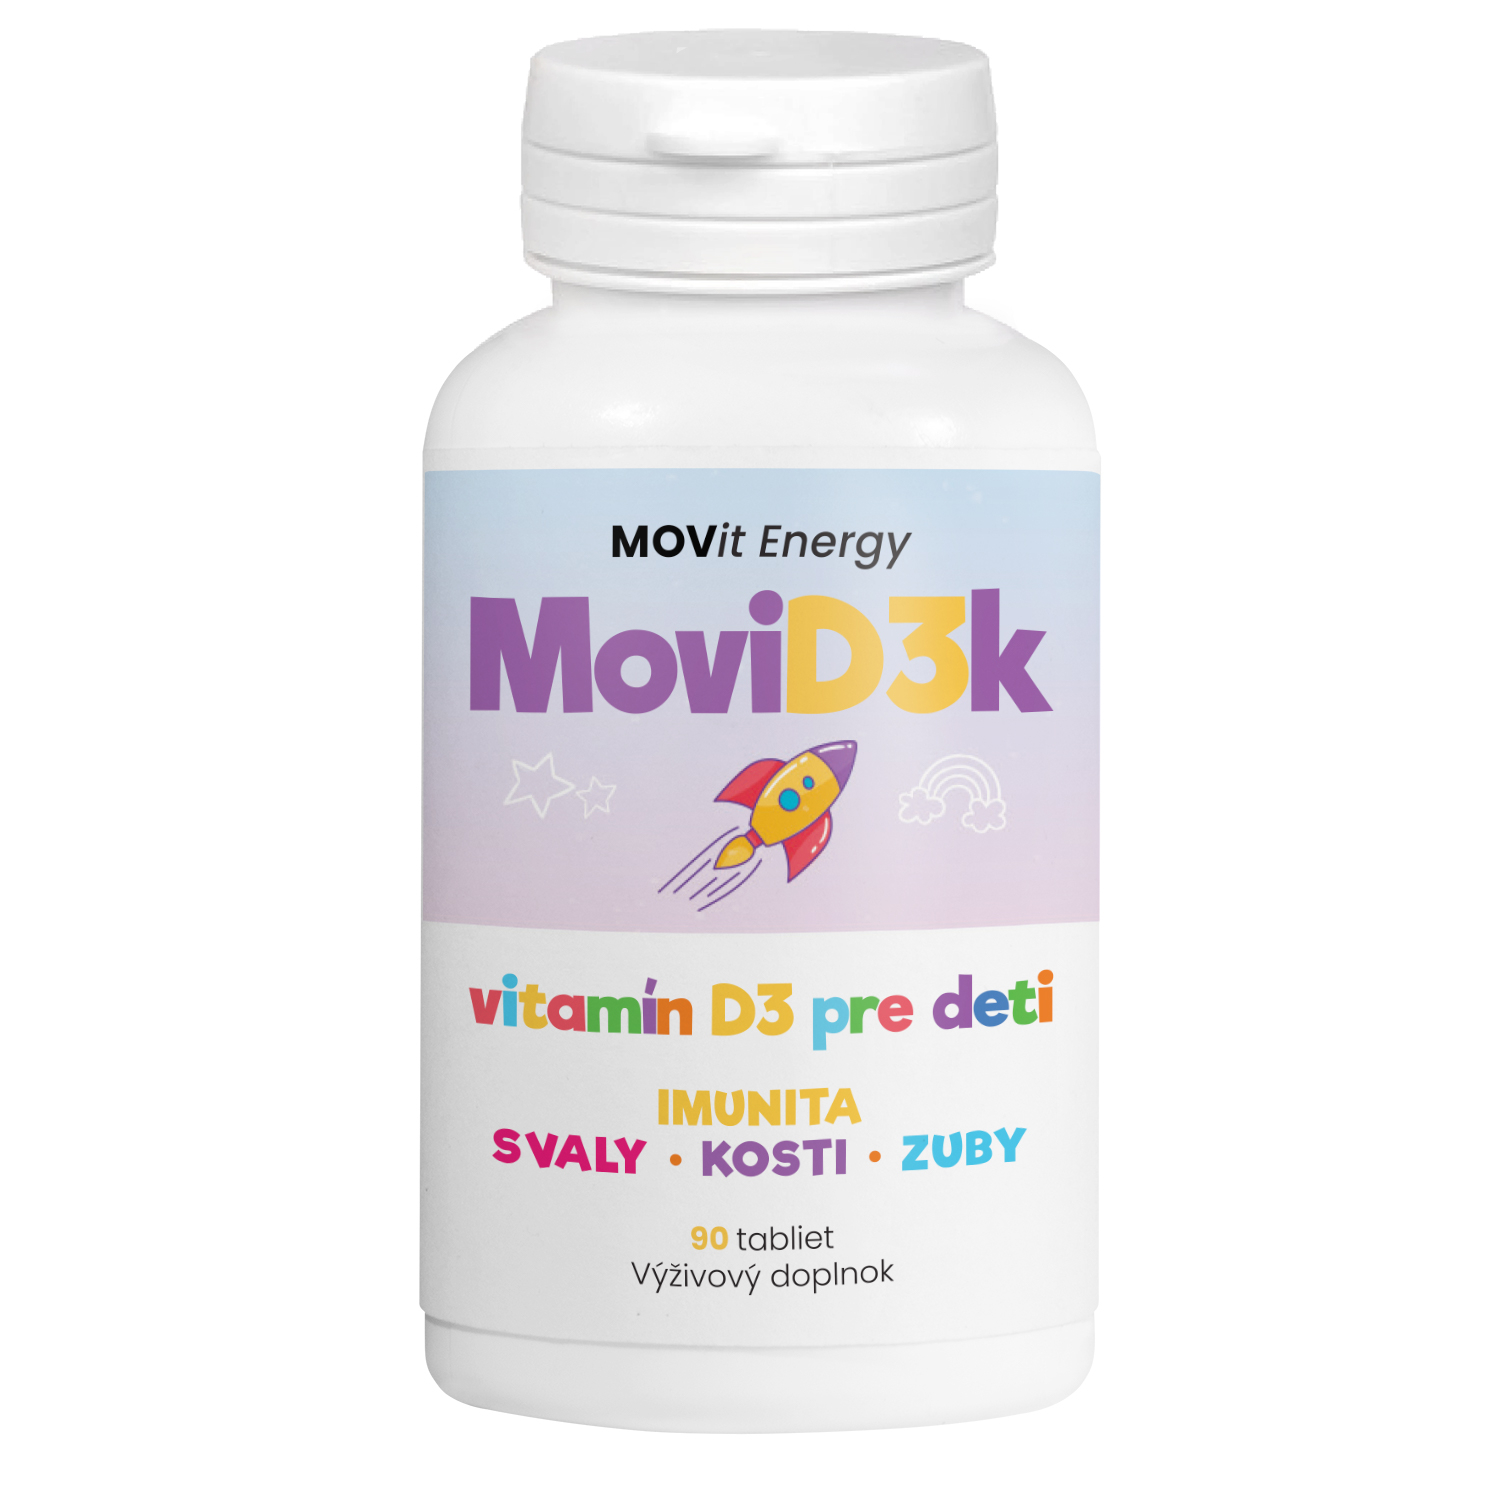 Movit Energy - MoviD3k - Vitamín D3 pre deti, 800 I.U., 20 mcg 90 tabliet